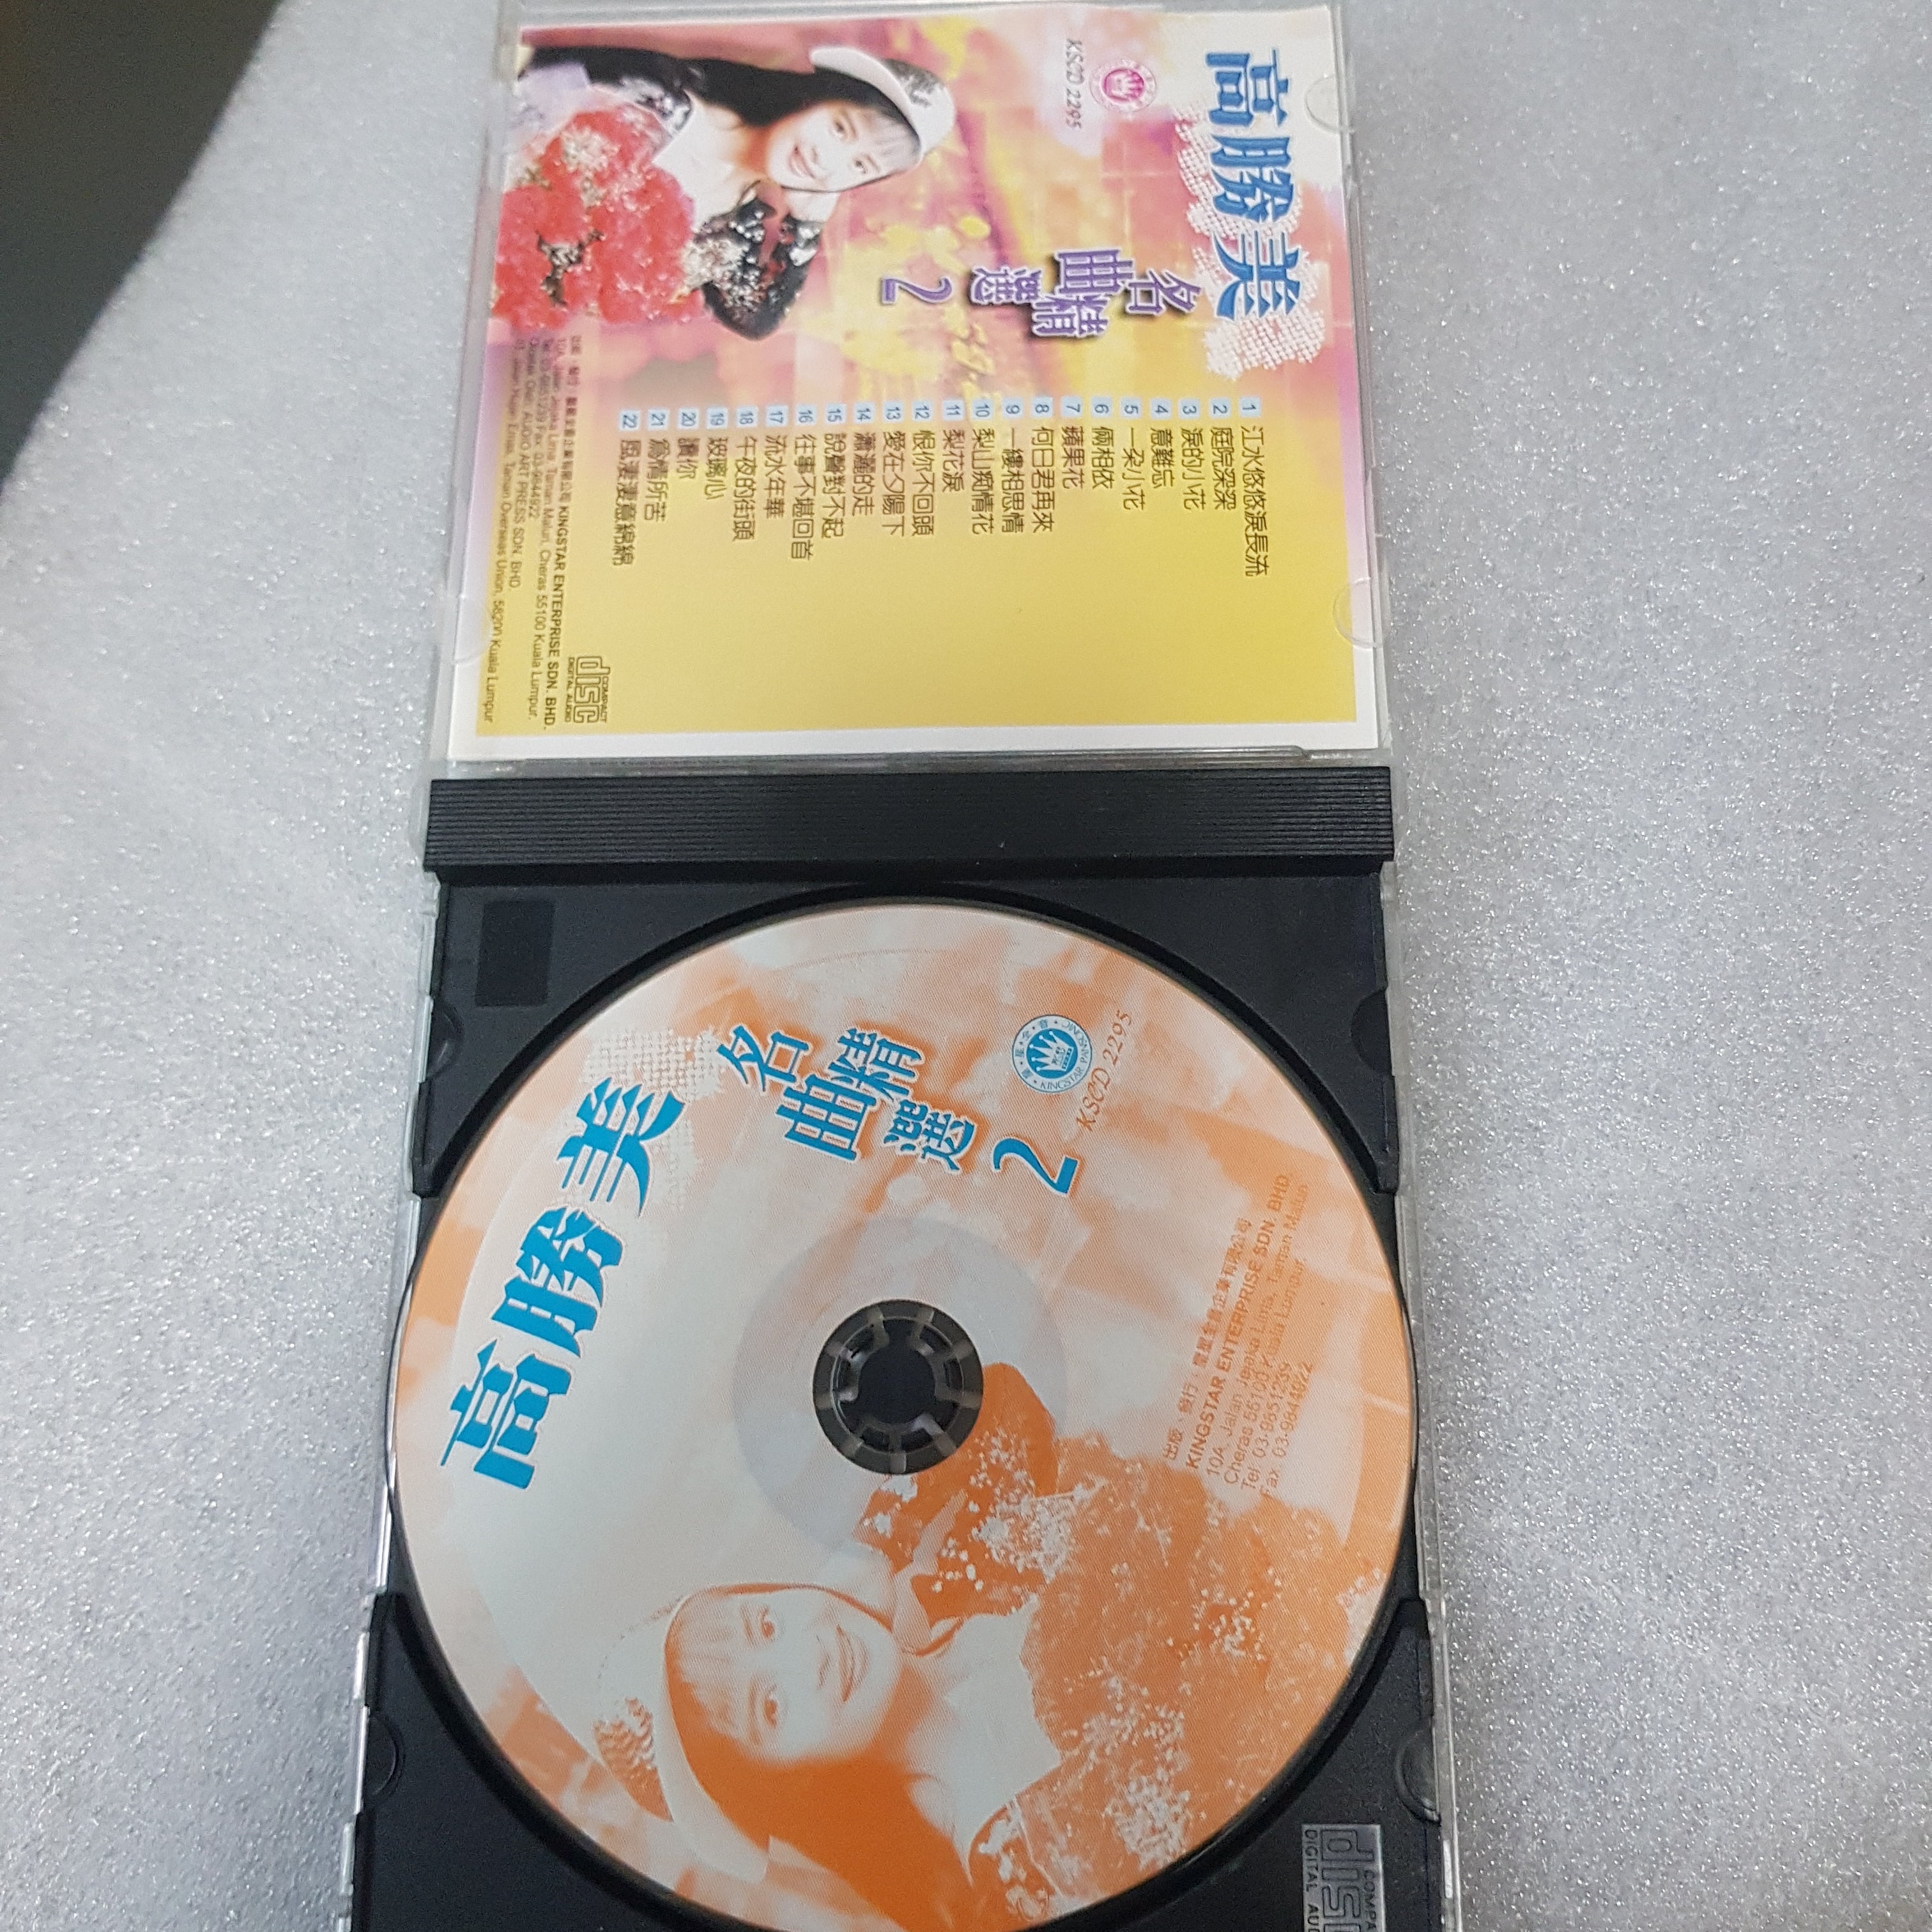 GML Ray Brown Evergreen 4403 高音質 CD 廃盤